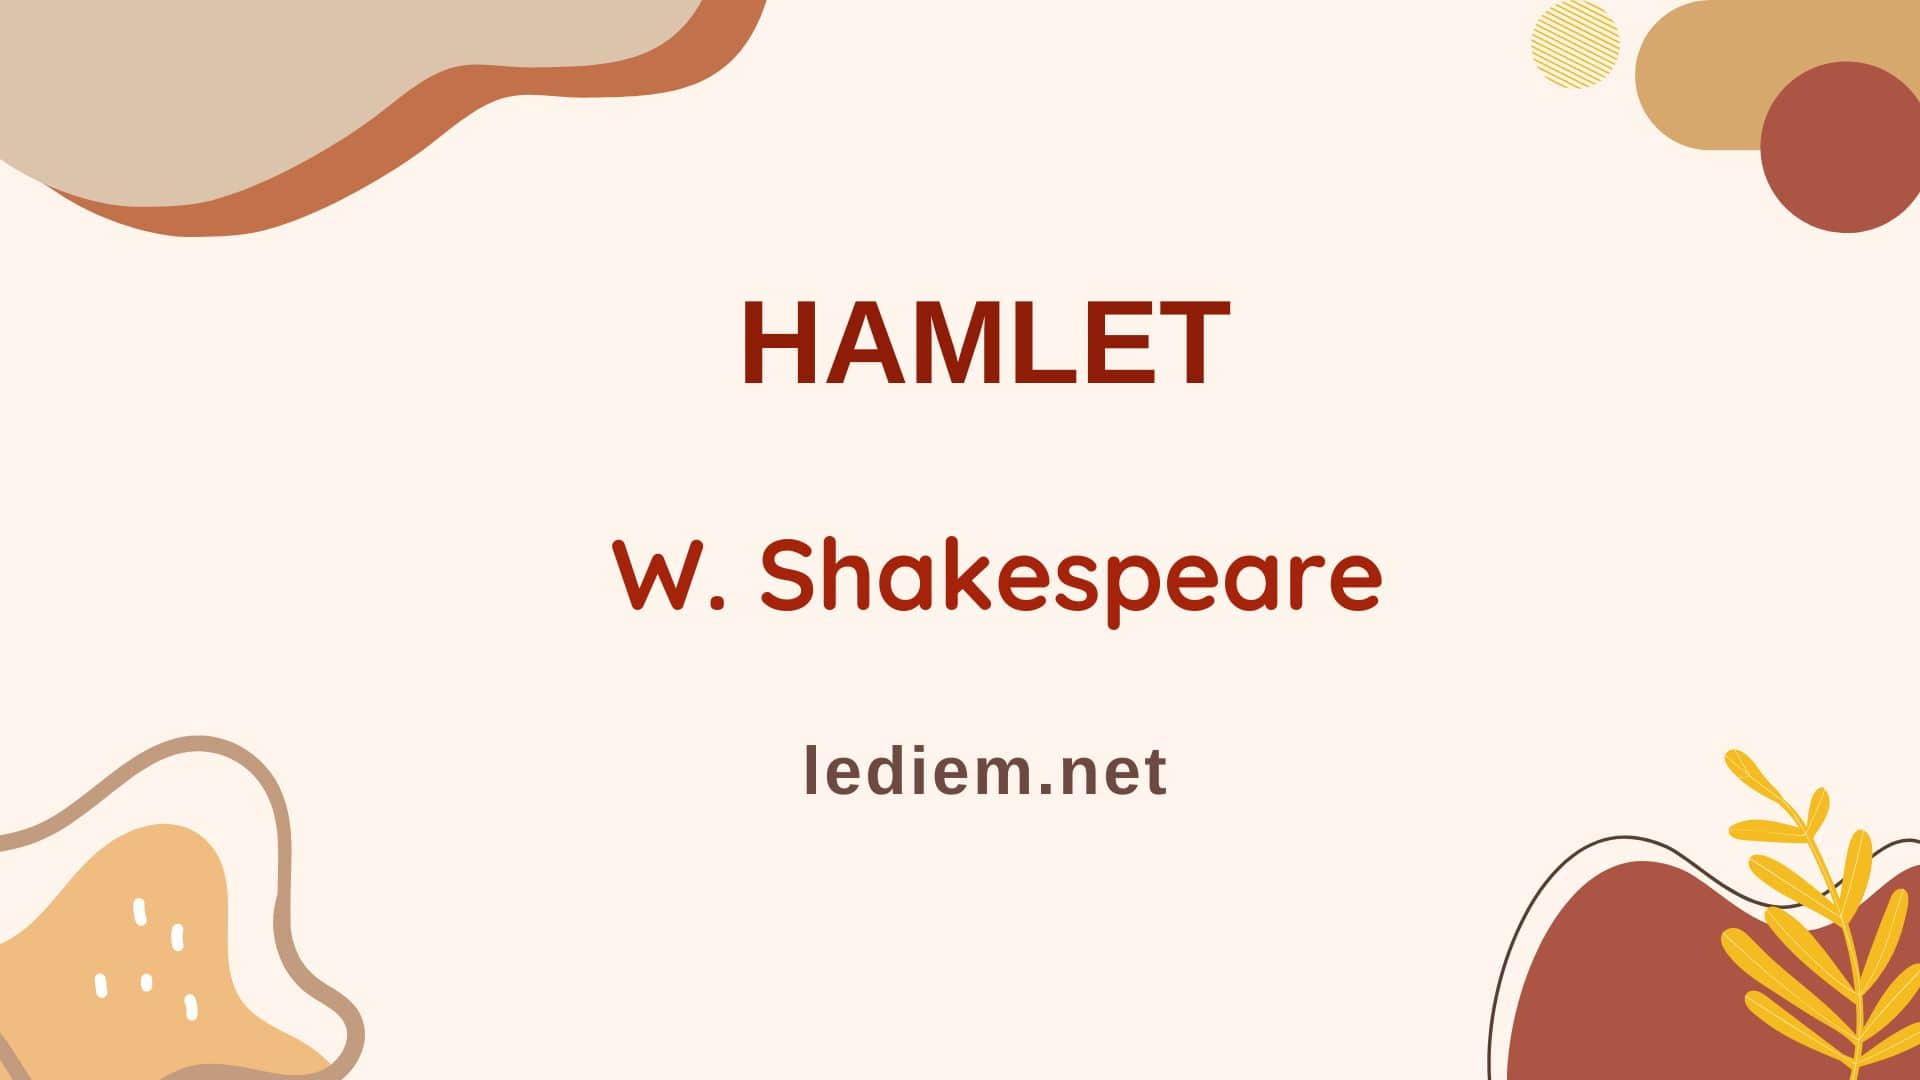 Hamlet (W. Shakespeare) ; đọc hiểu hamlet ; trắc nghiệm hamlet ; hamlet đọc hiểu ; hamlet trắc nghiệm (10 CÂU HỎI, Đề kiểm tra)